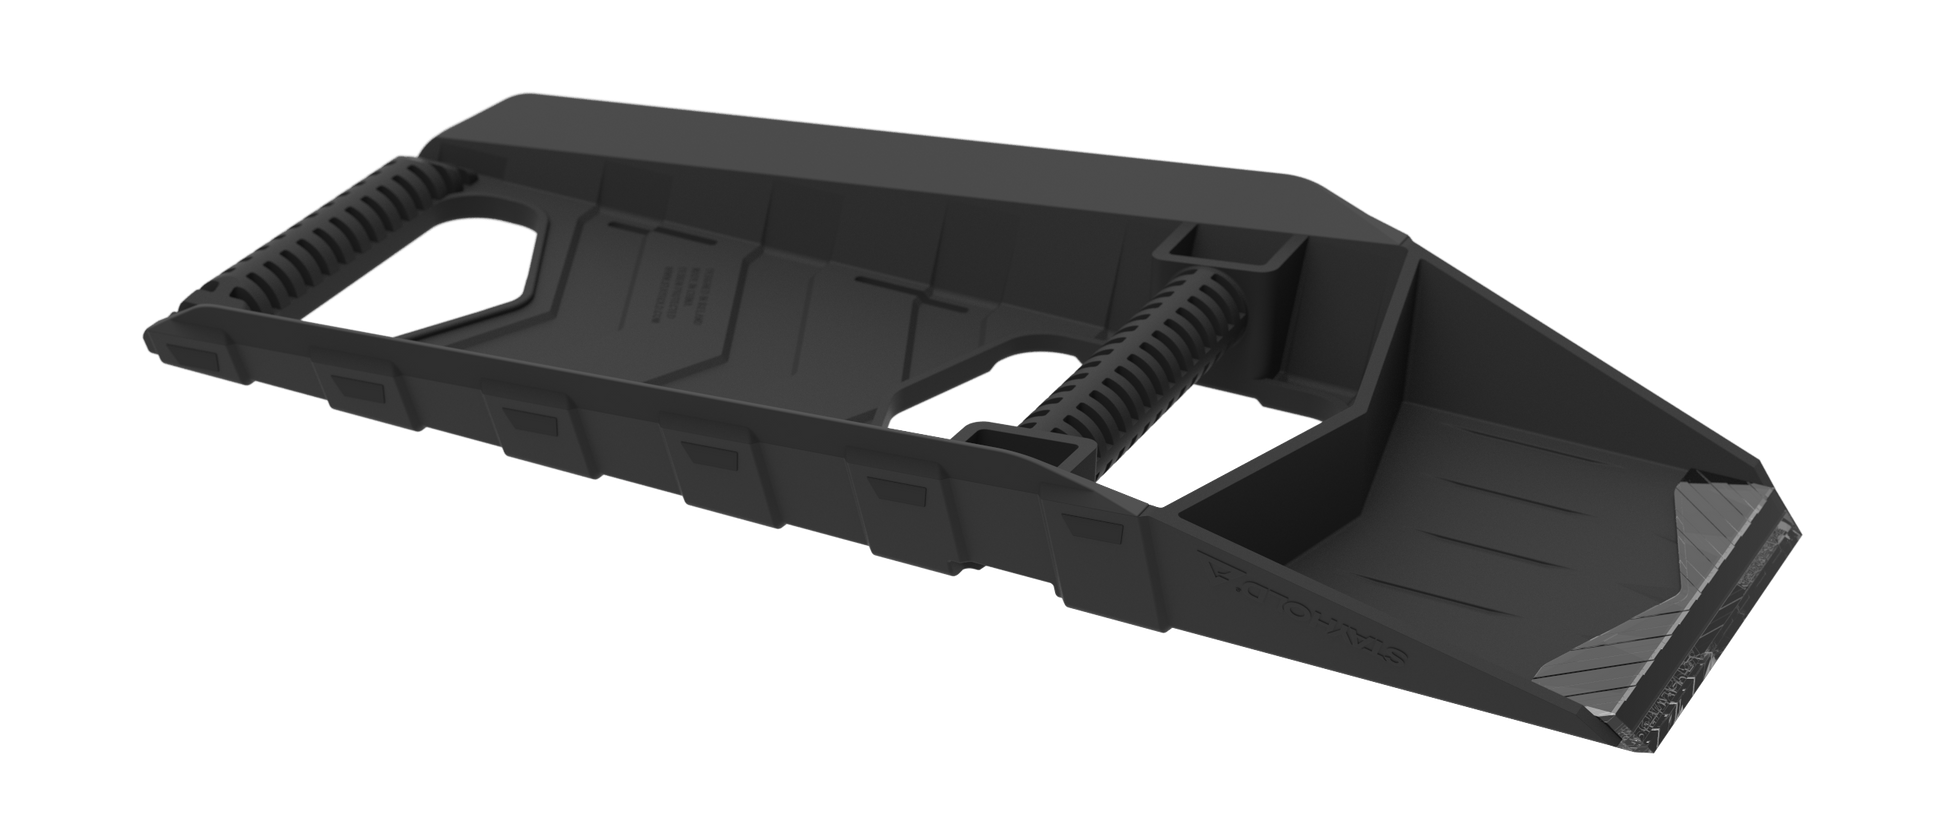 Stayhold Compact Safety Shovel Glass Filled Nylon - Black Edition underside